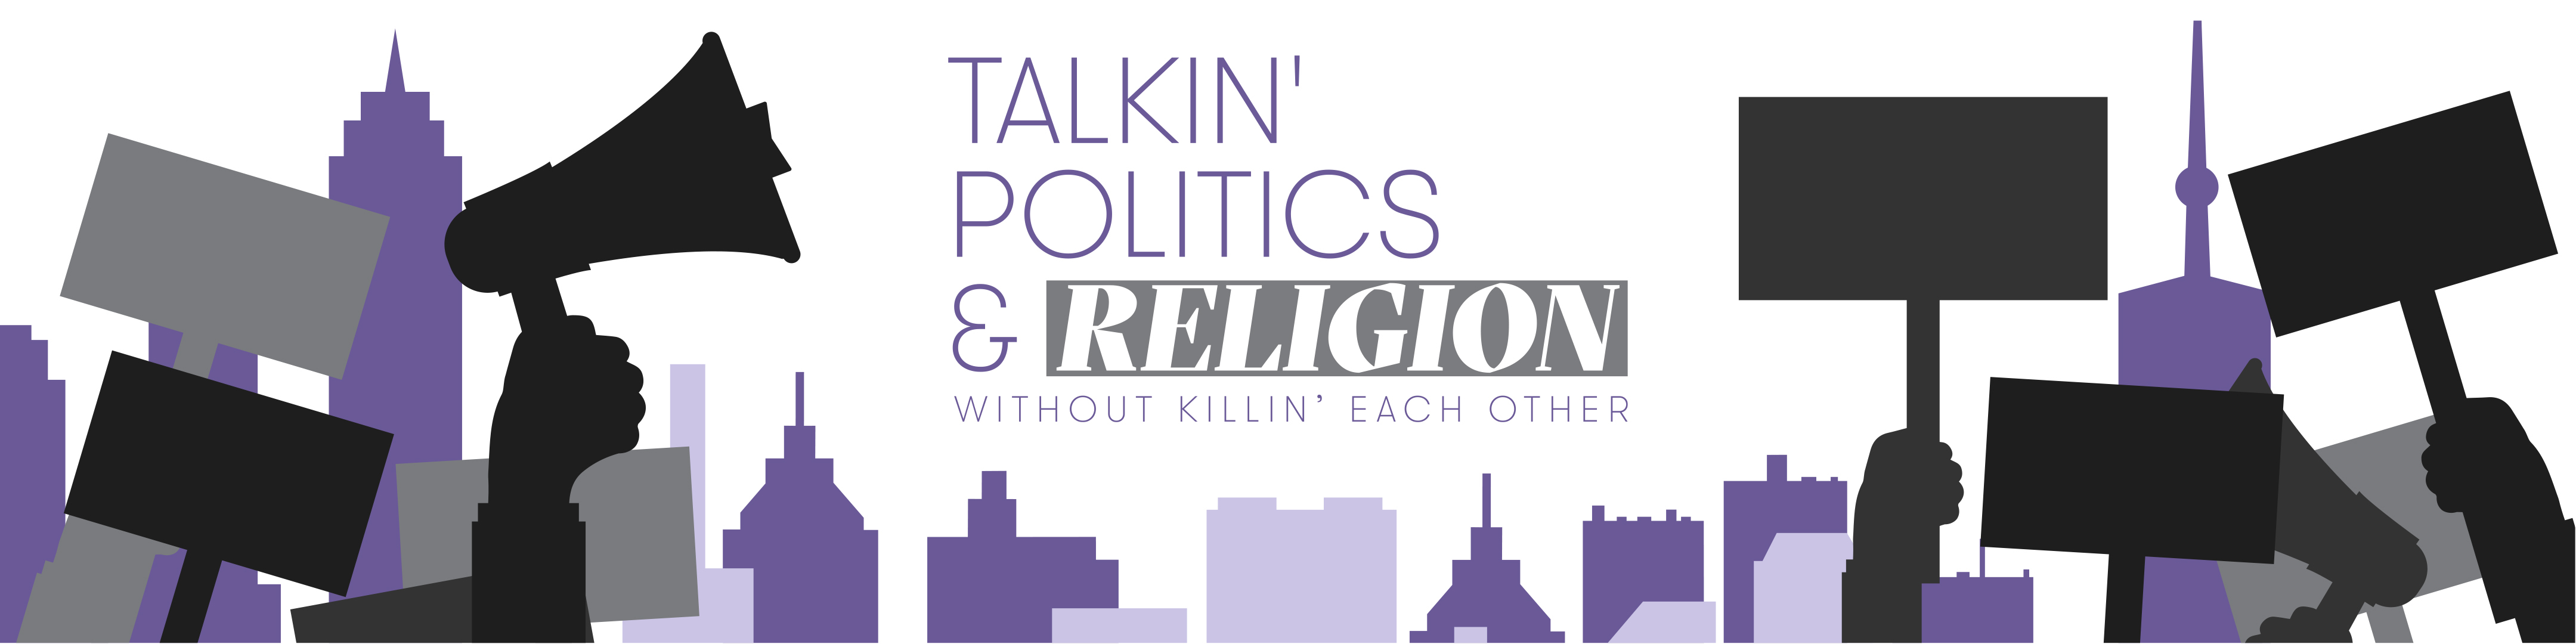 Talkin‘ Politics & Religion Without Killin‘ Each Other